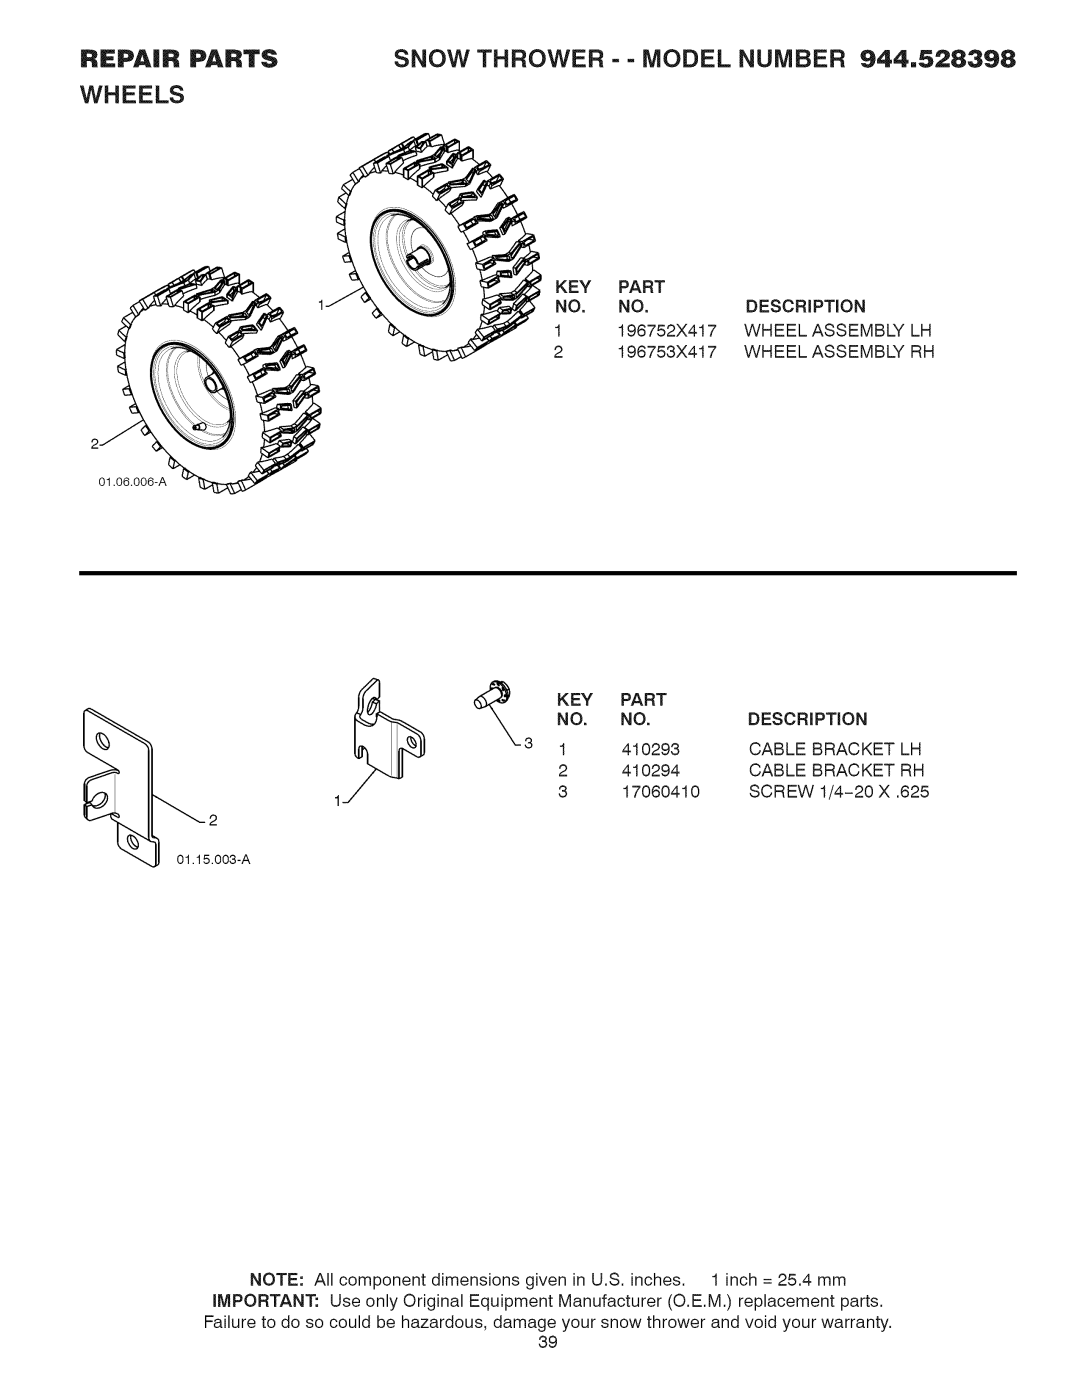 Craftsman 944.528398 owner manual Repair Parts, SNOW THROWER - - MODEL NUMBER 944,528398, Wheels, Description 